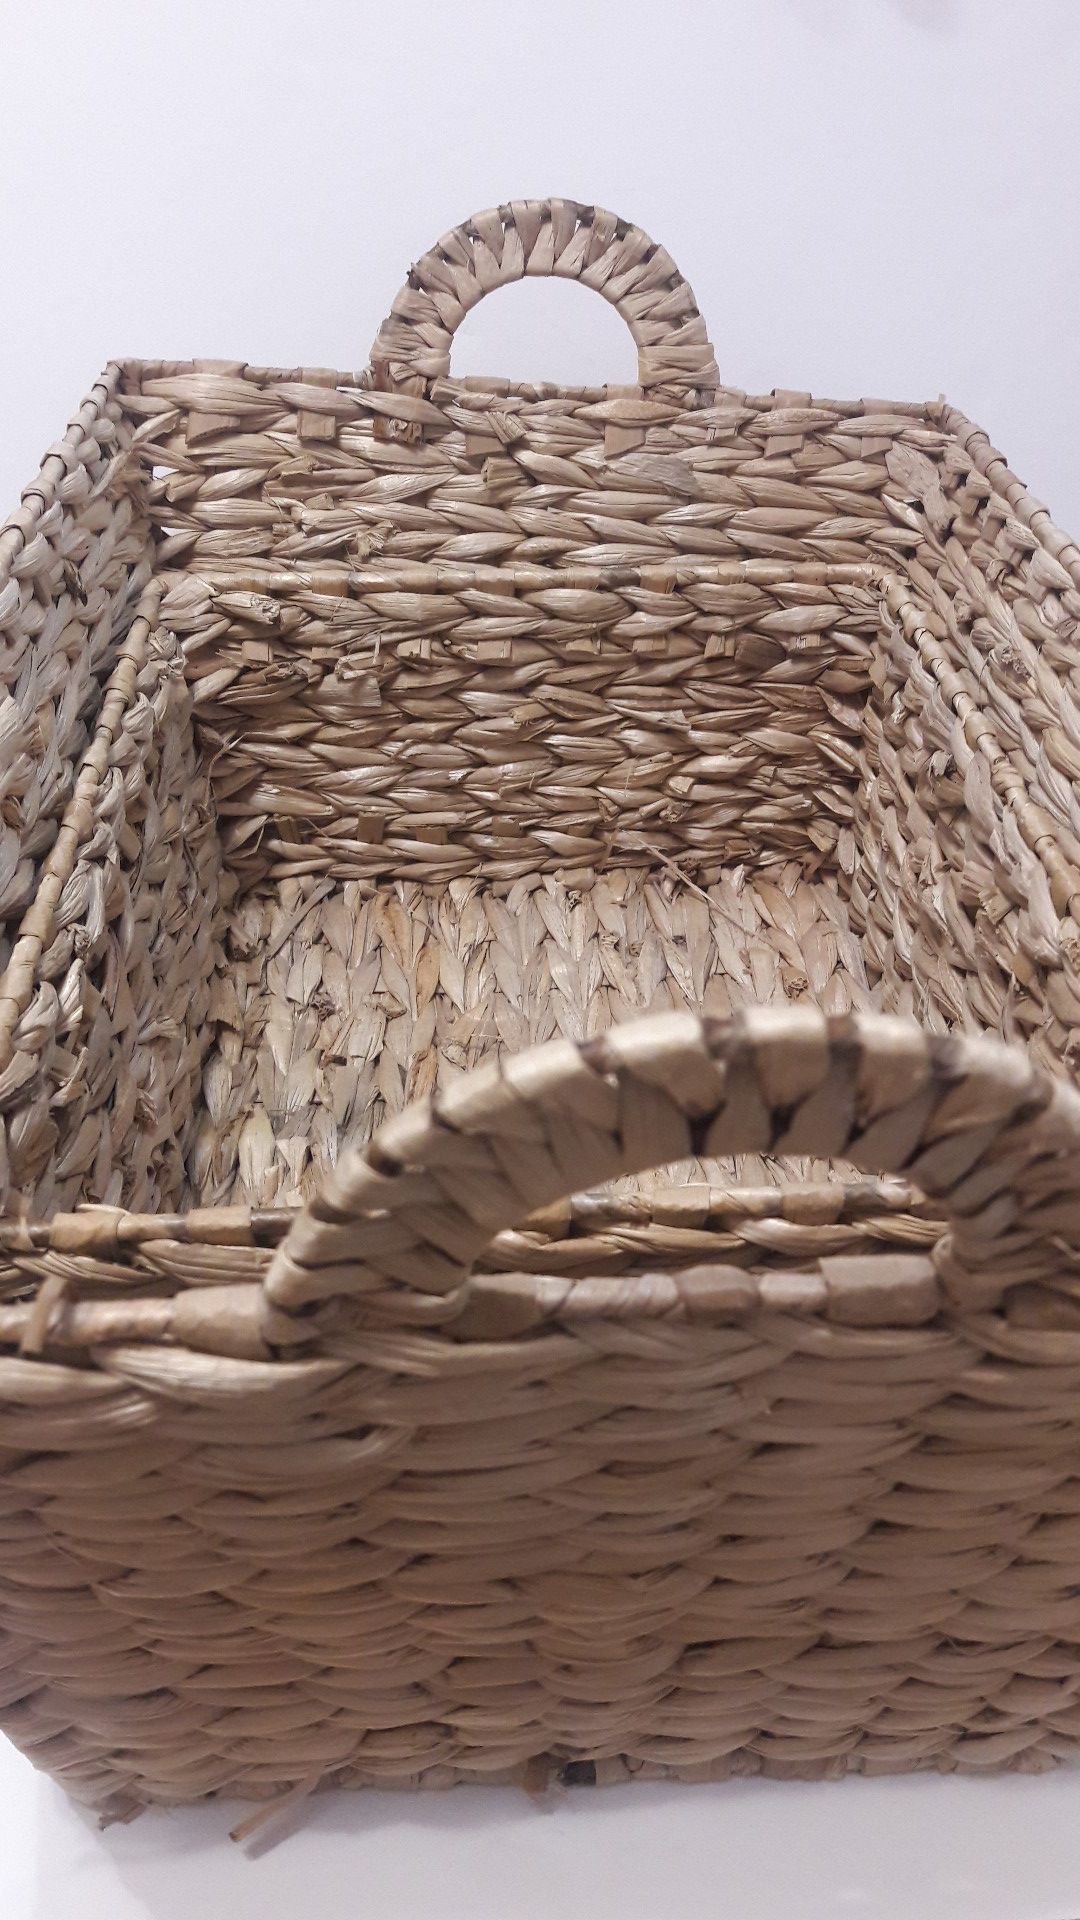 15.5" x 11" basket and 11" x 9". Metal frame. Corn husk weave?